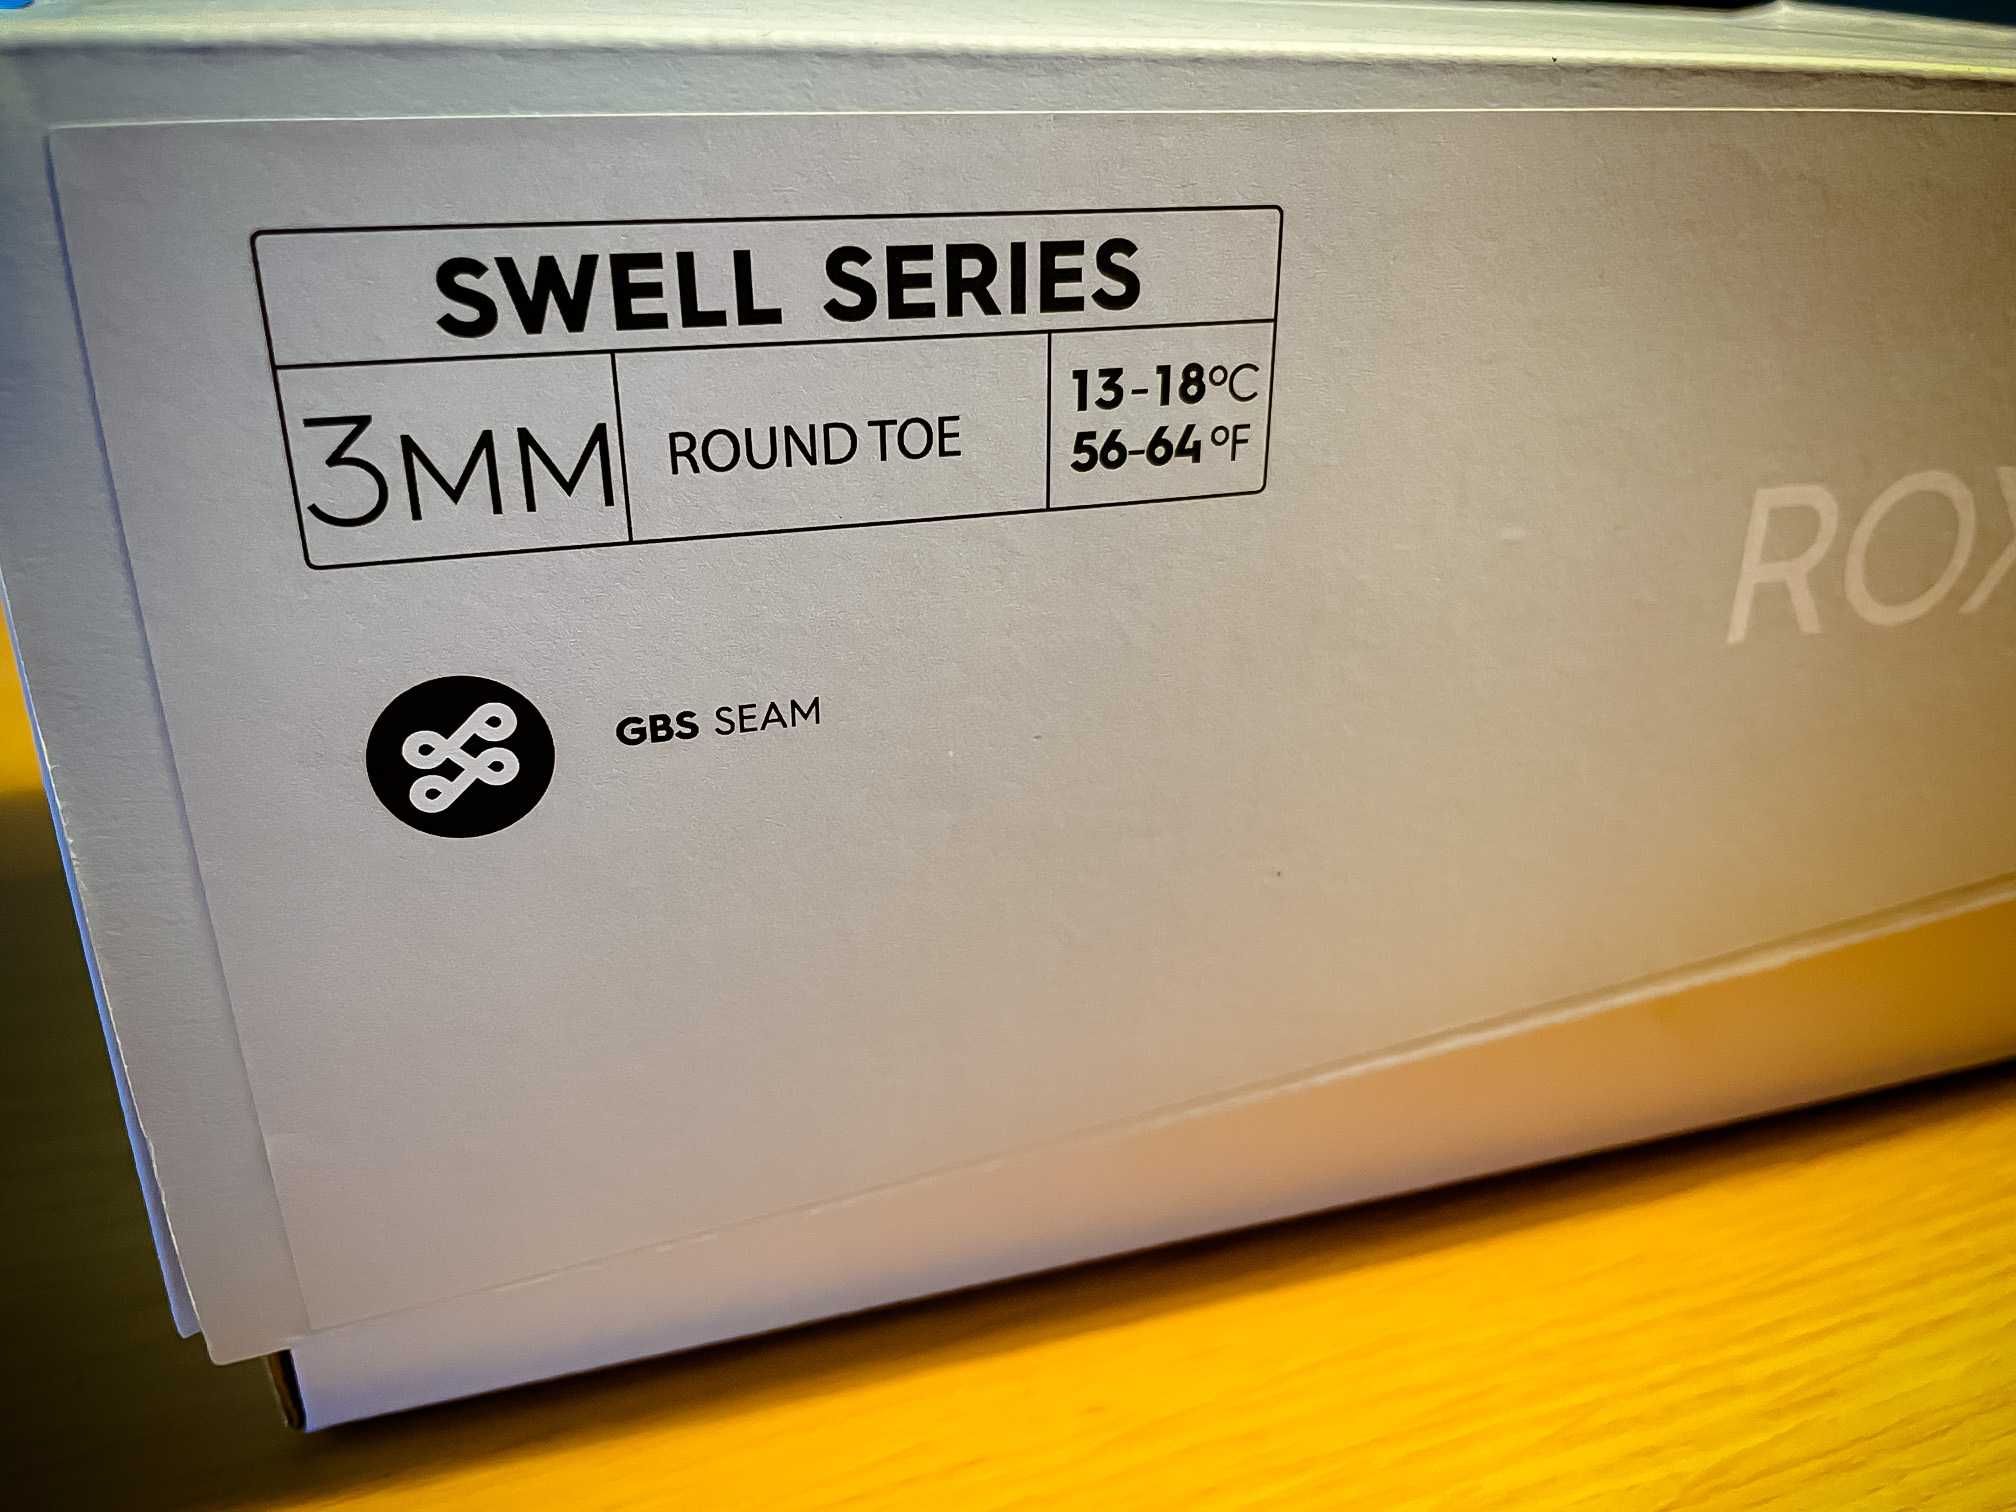 Botas Surf Roxy de neoprene 3mm Swell Series - tamanho 38/39 - NOVAS